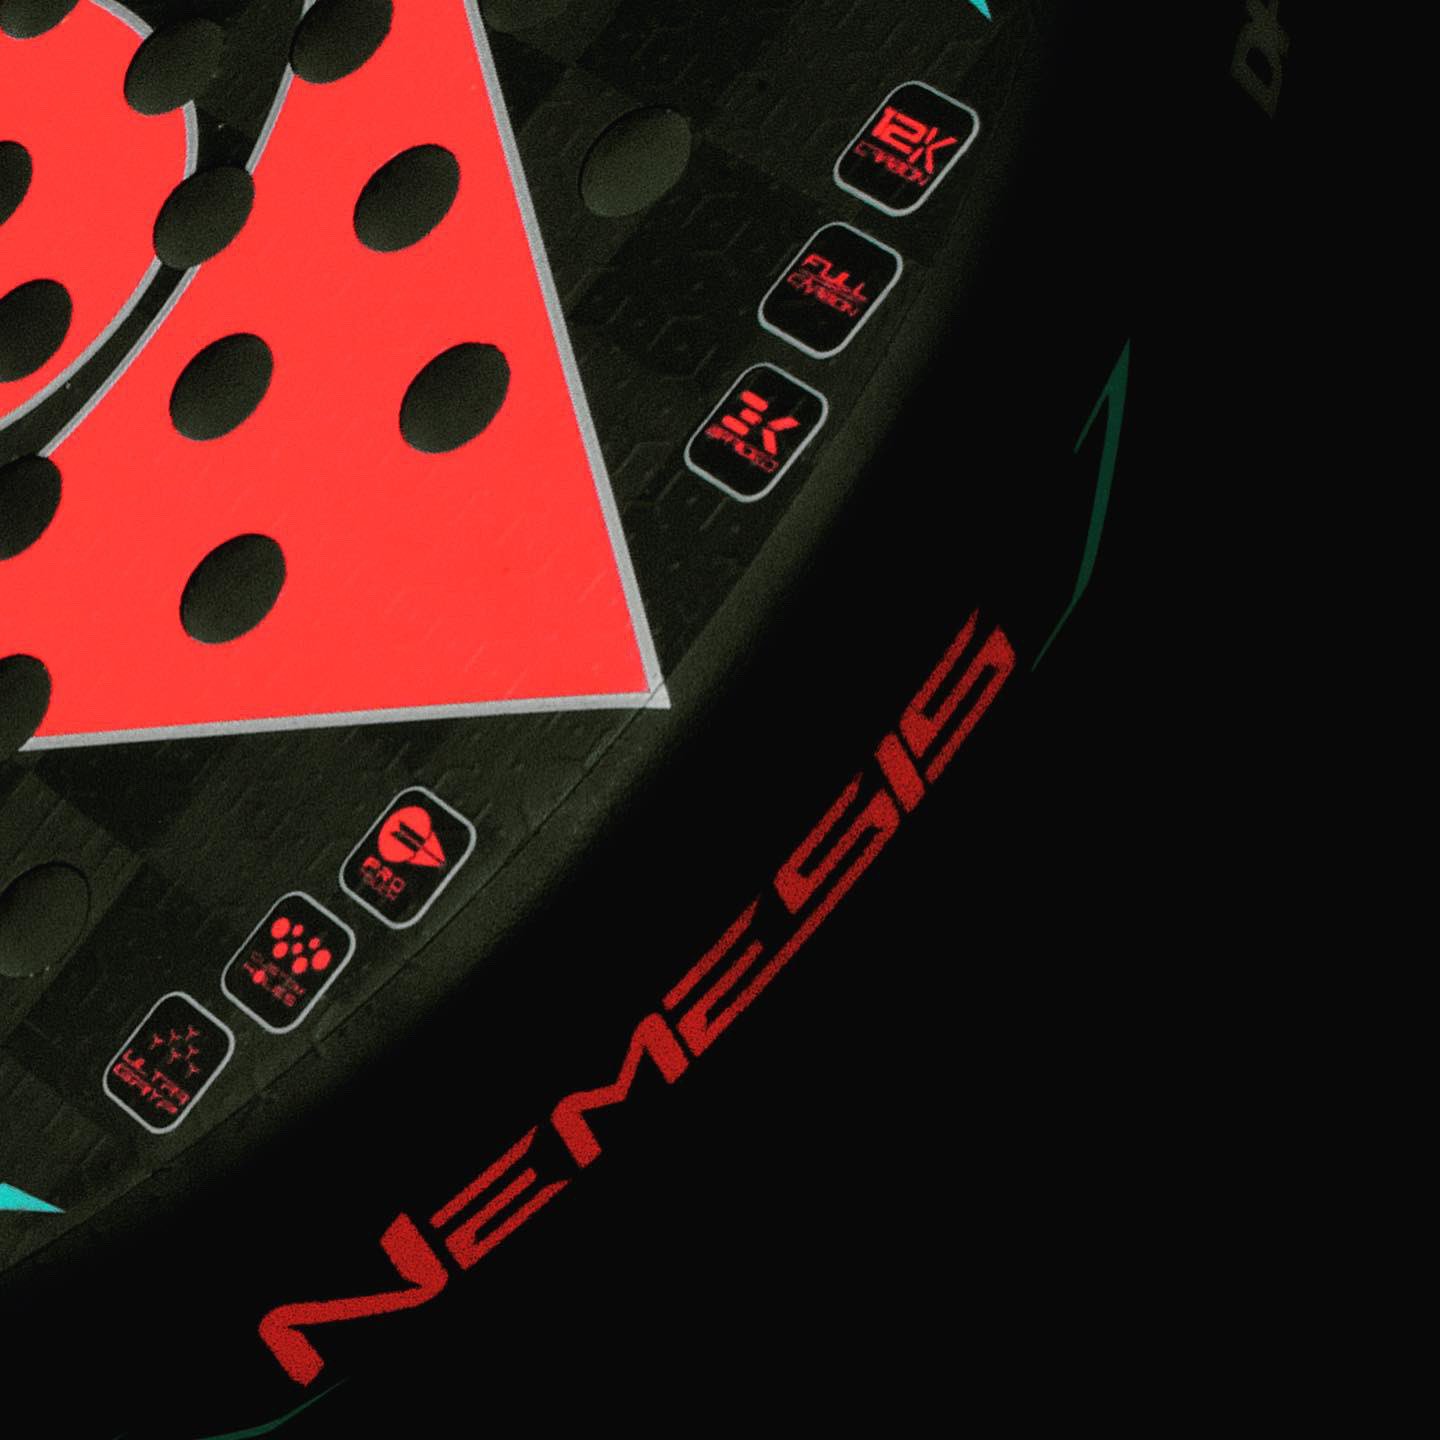 El nou Dunlop Nemesis